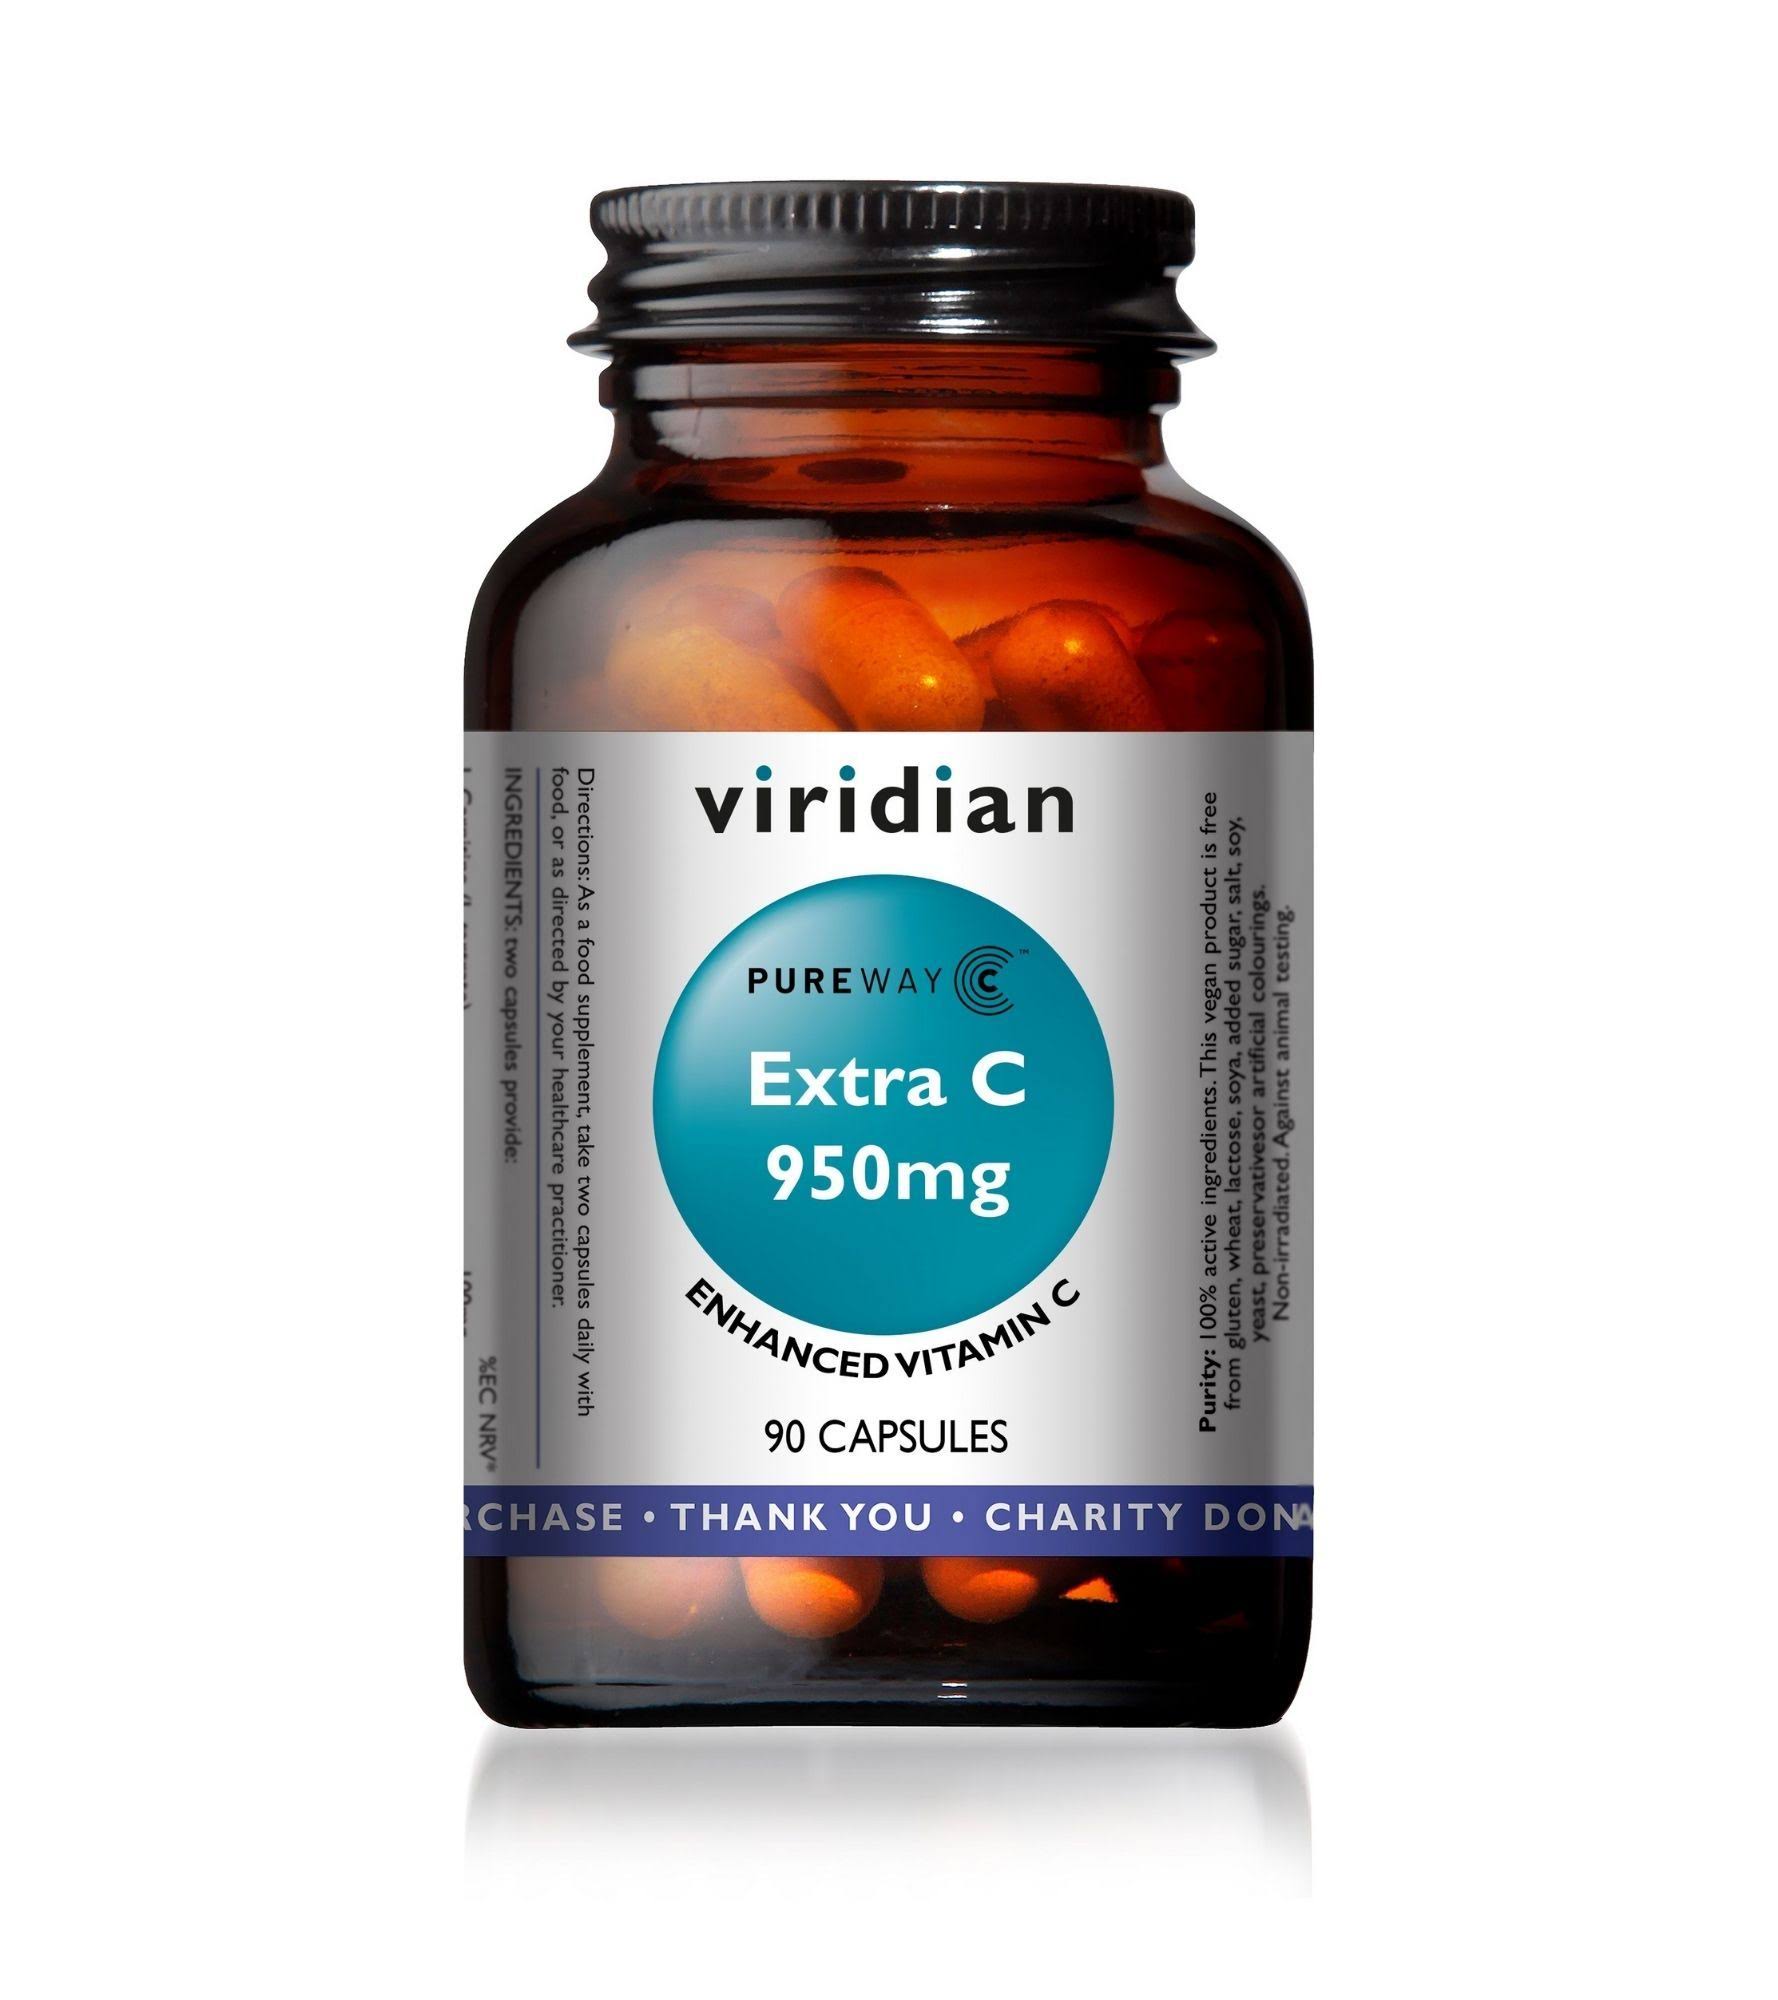 Viridian Extra C 950mg (90 Capsules)